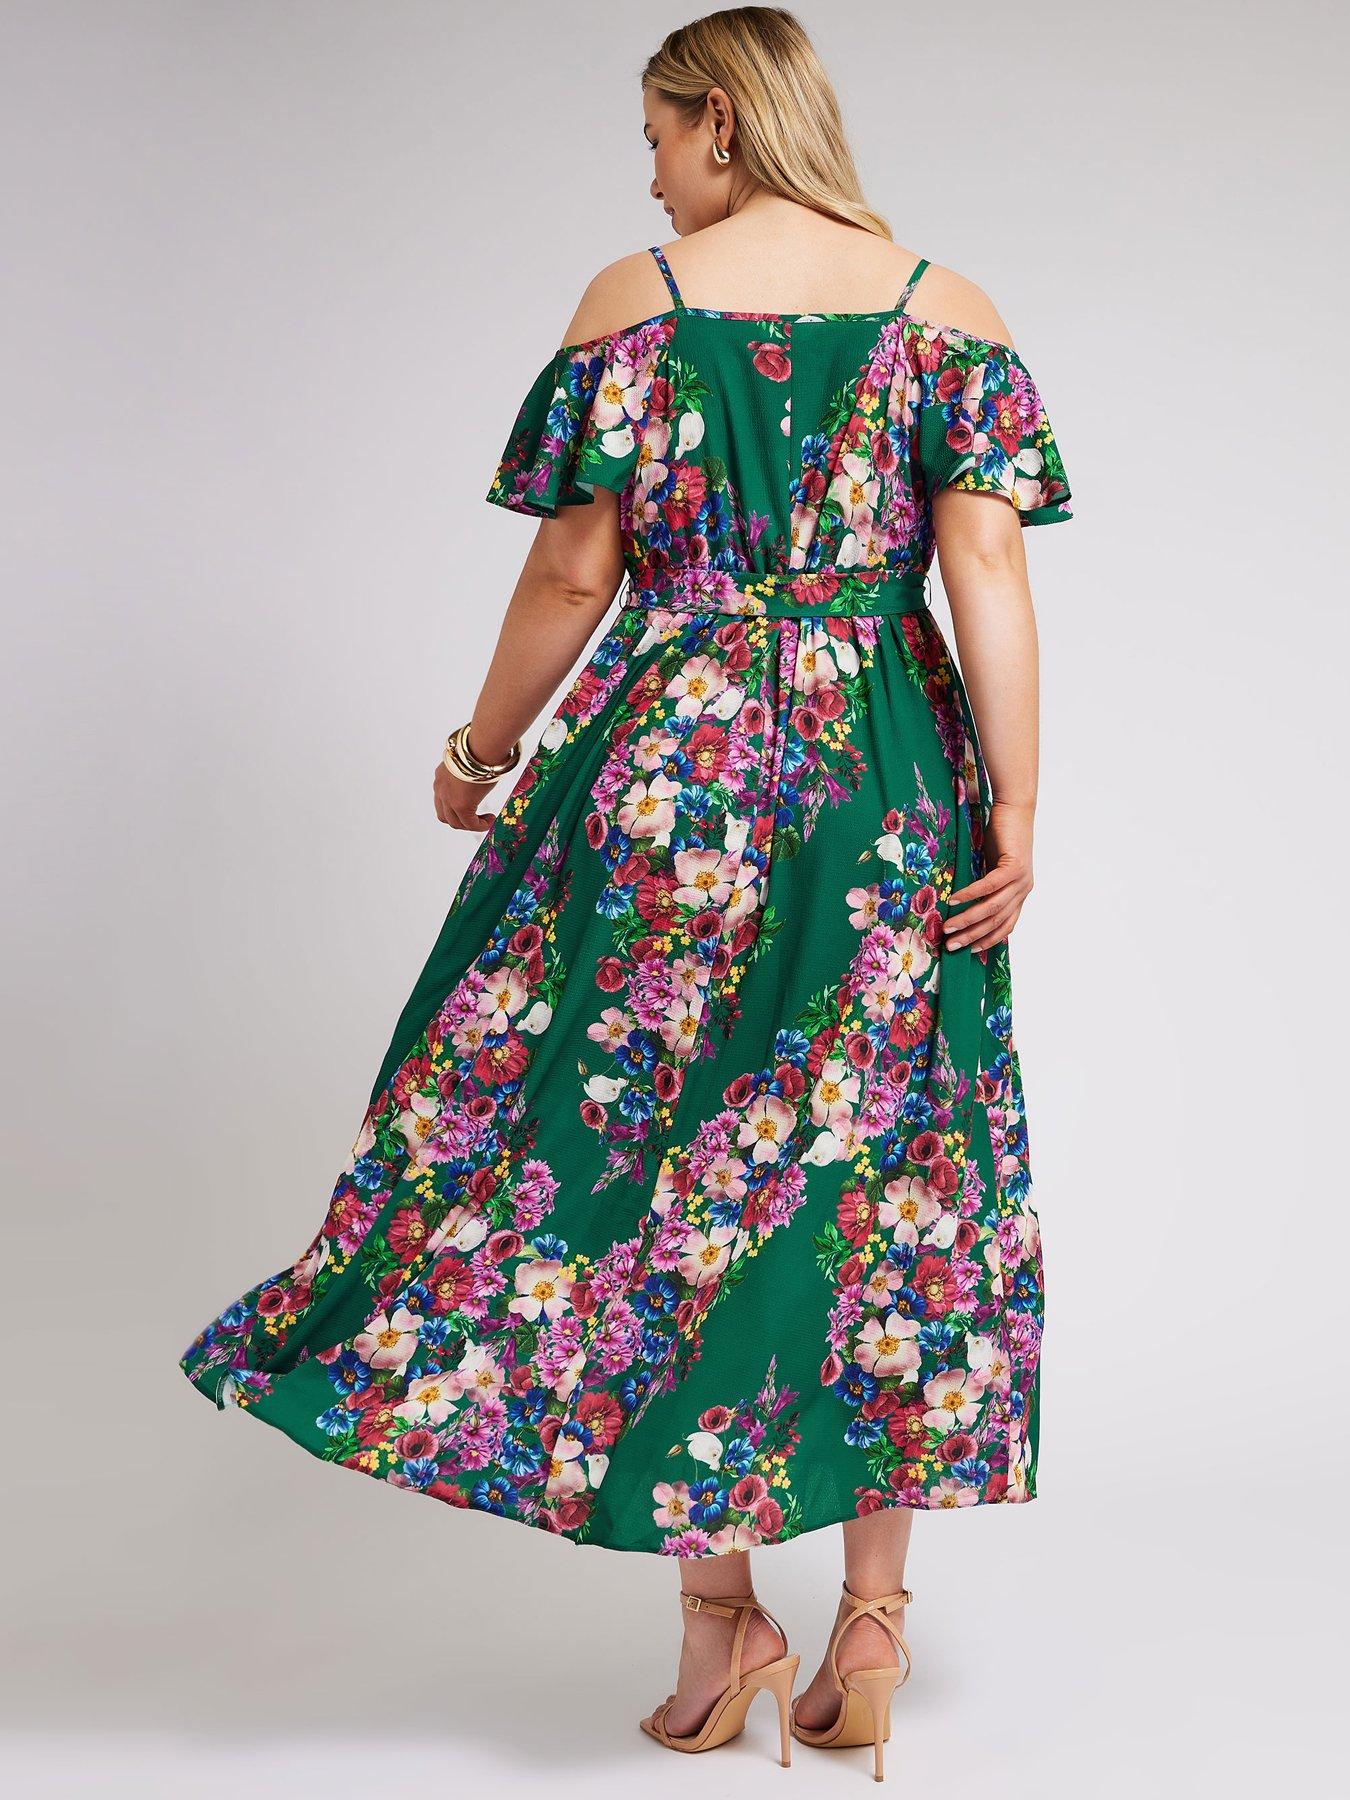 Yours Curve Floral Cold Shoulder Wrap Dress | Very.co.uk